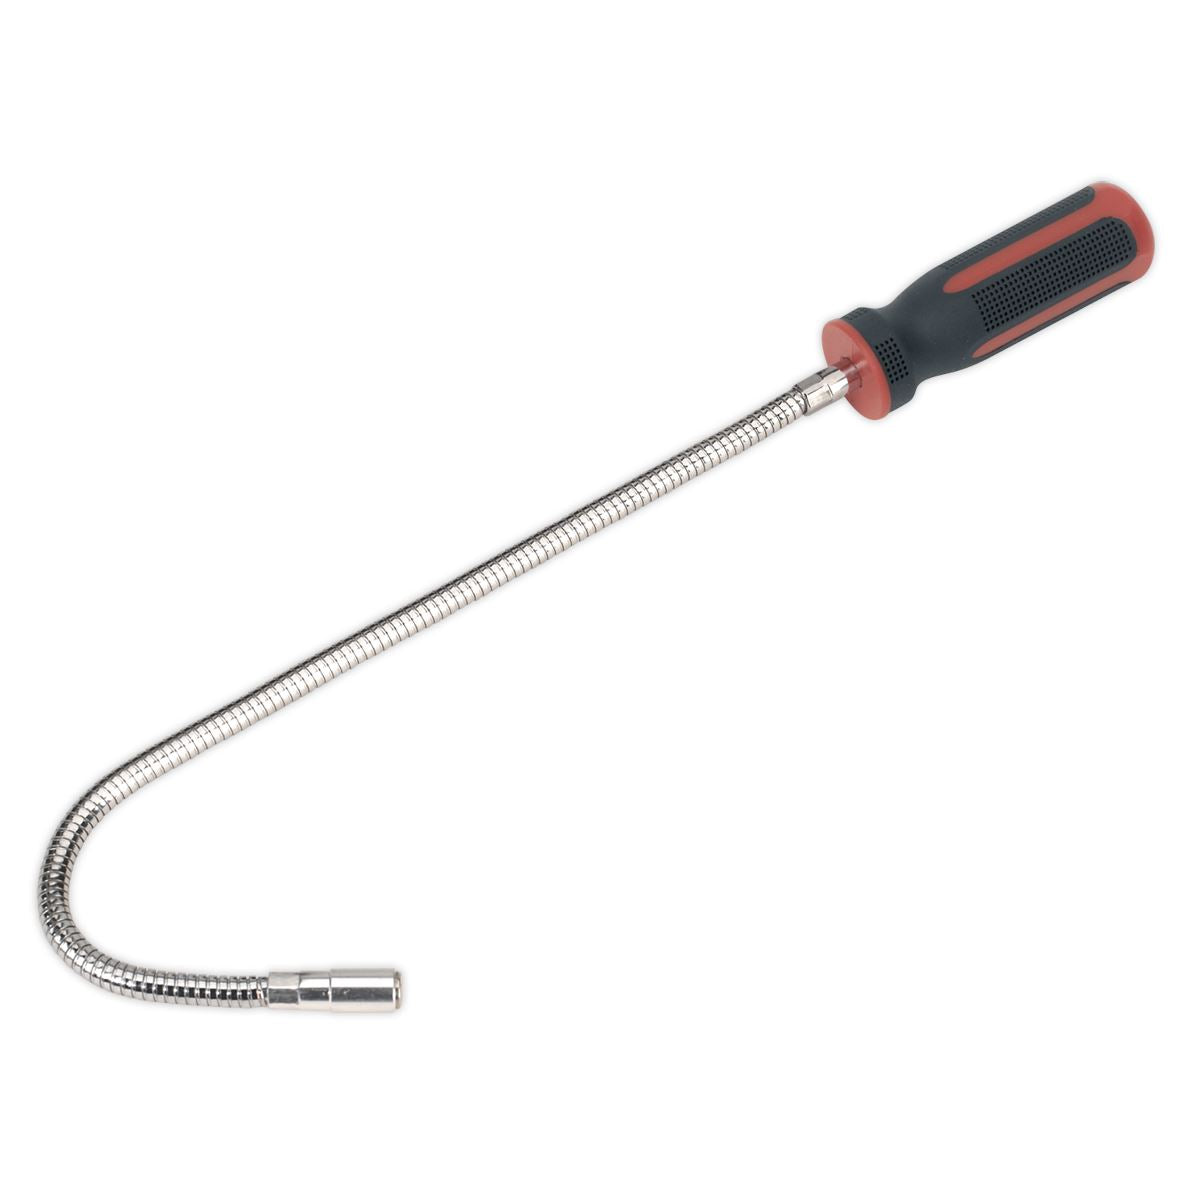 Sealey Premier Flexible Magnetic Pick-Up Tool 1kg Capacity